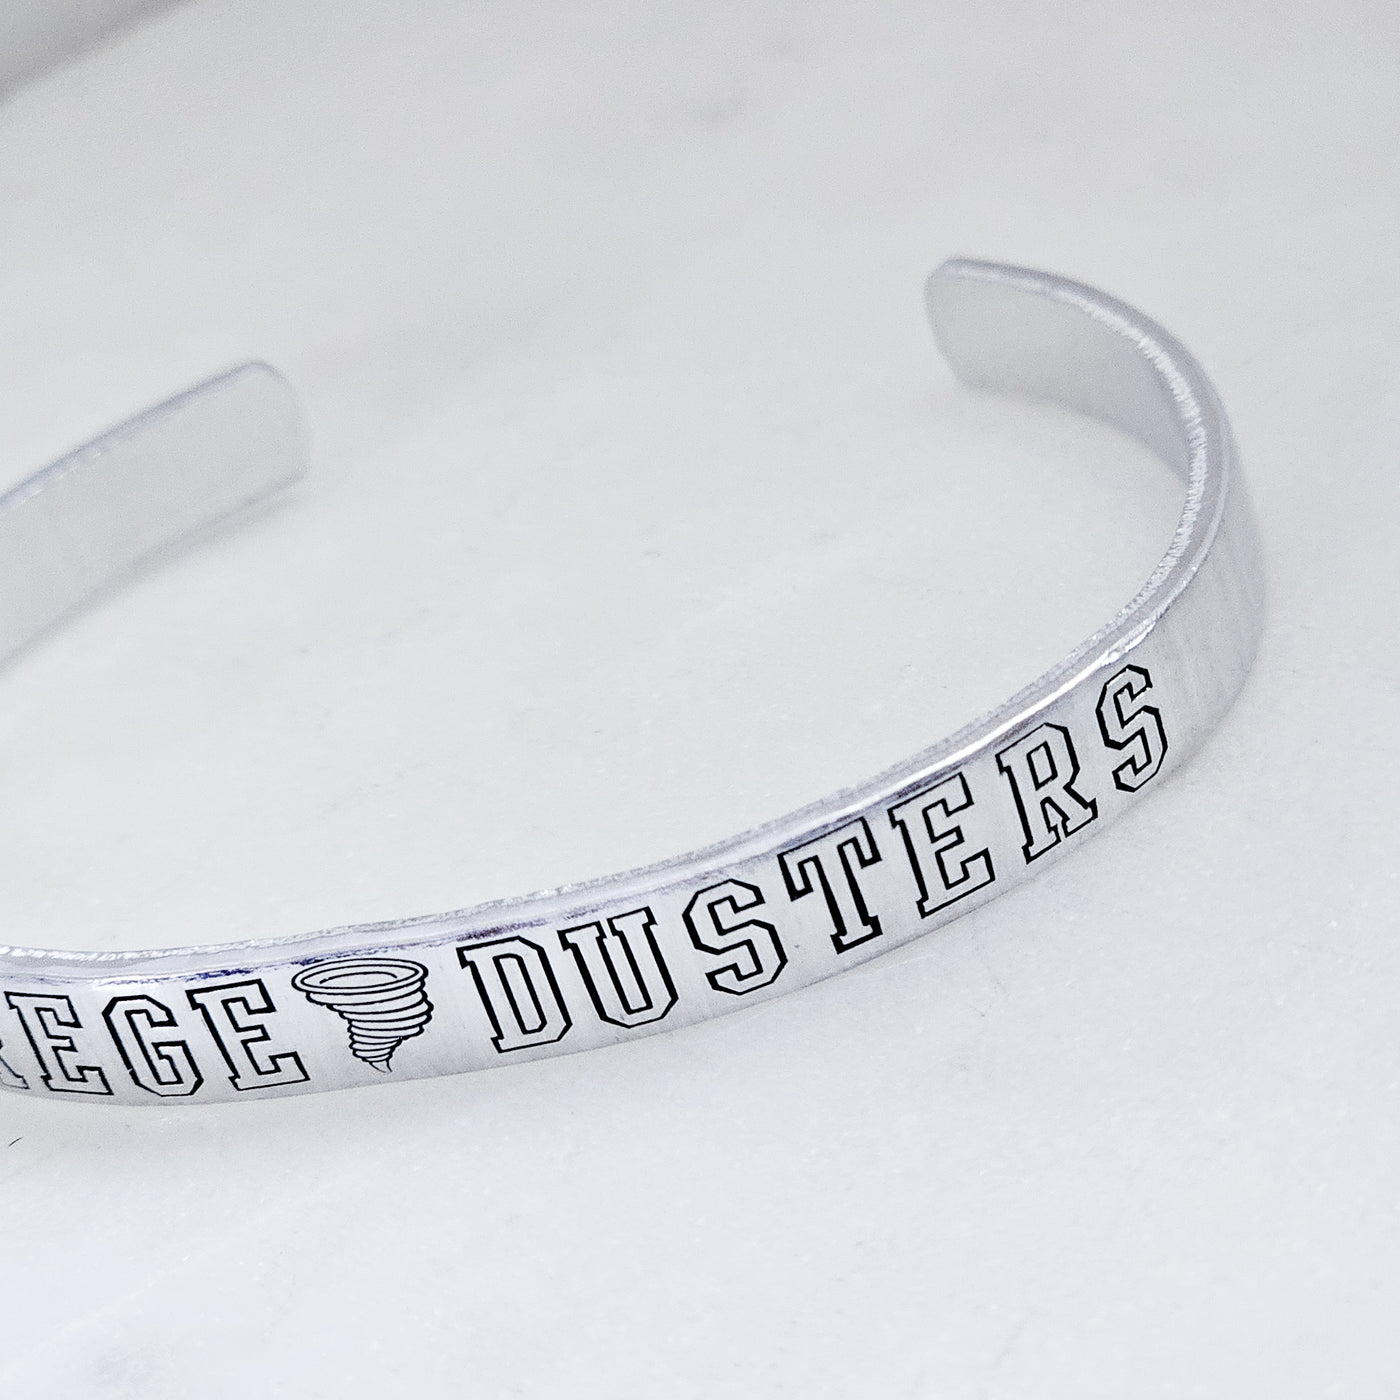 Holdrege Dusters Varsity Style || Cuff Bracelet